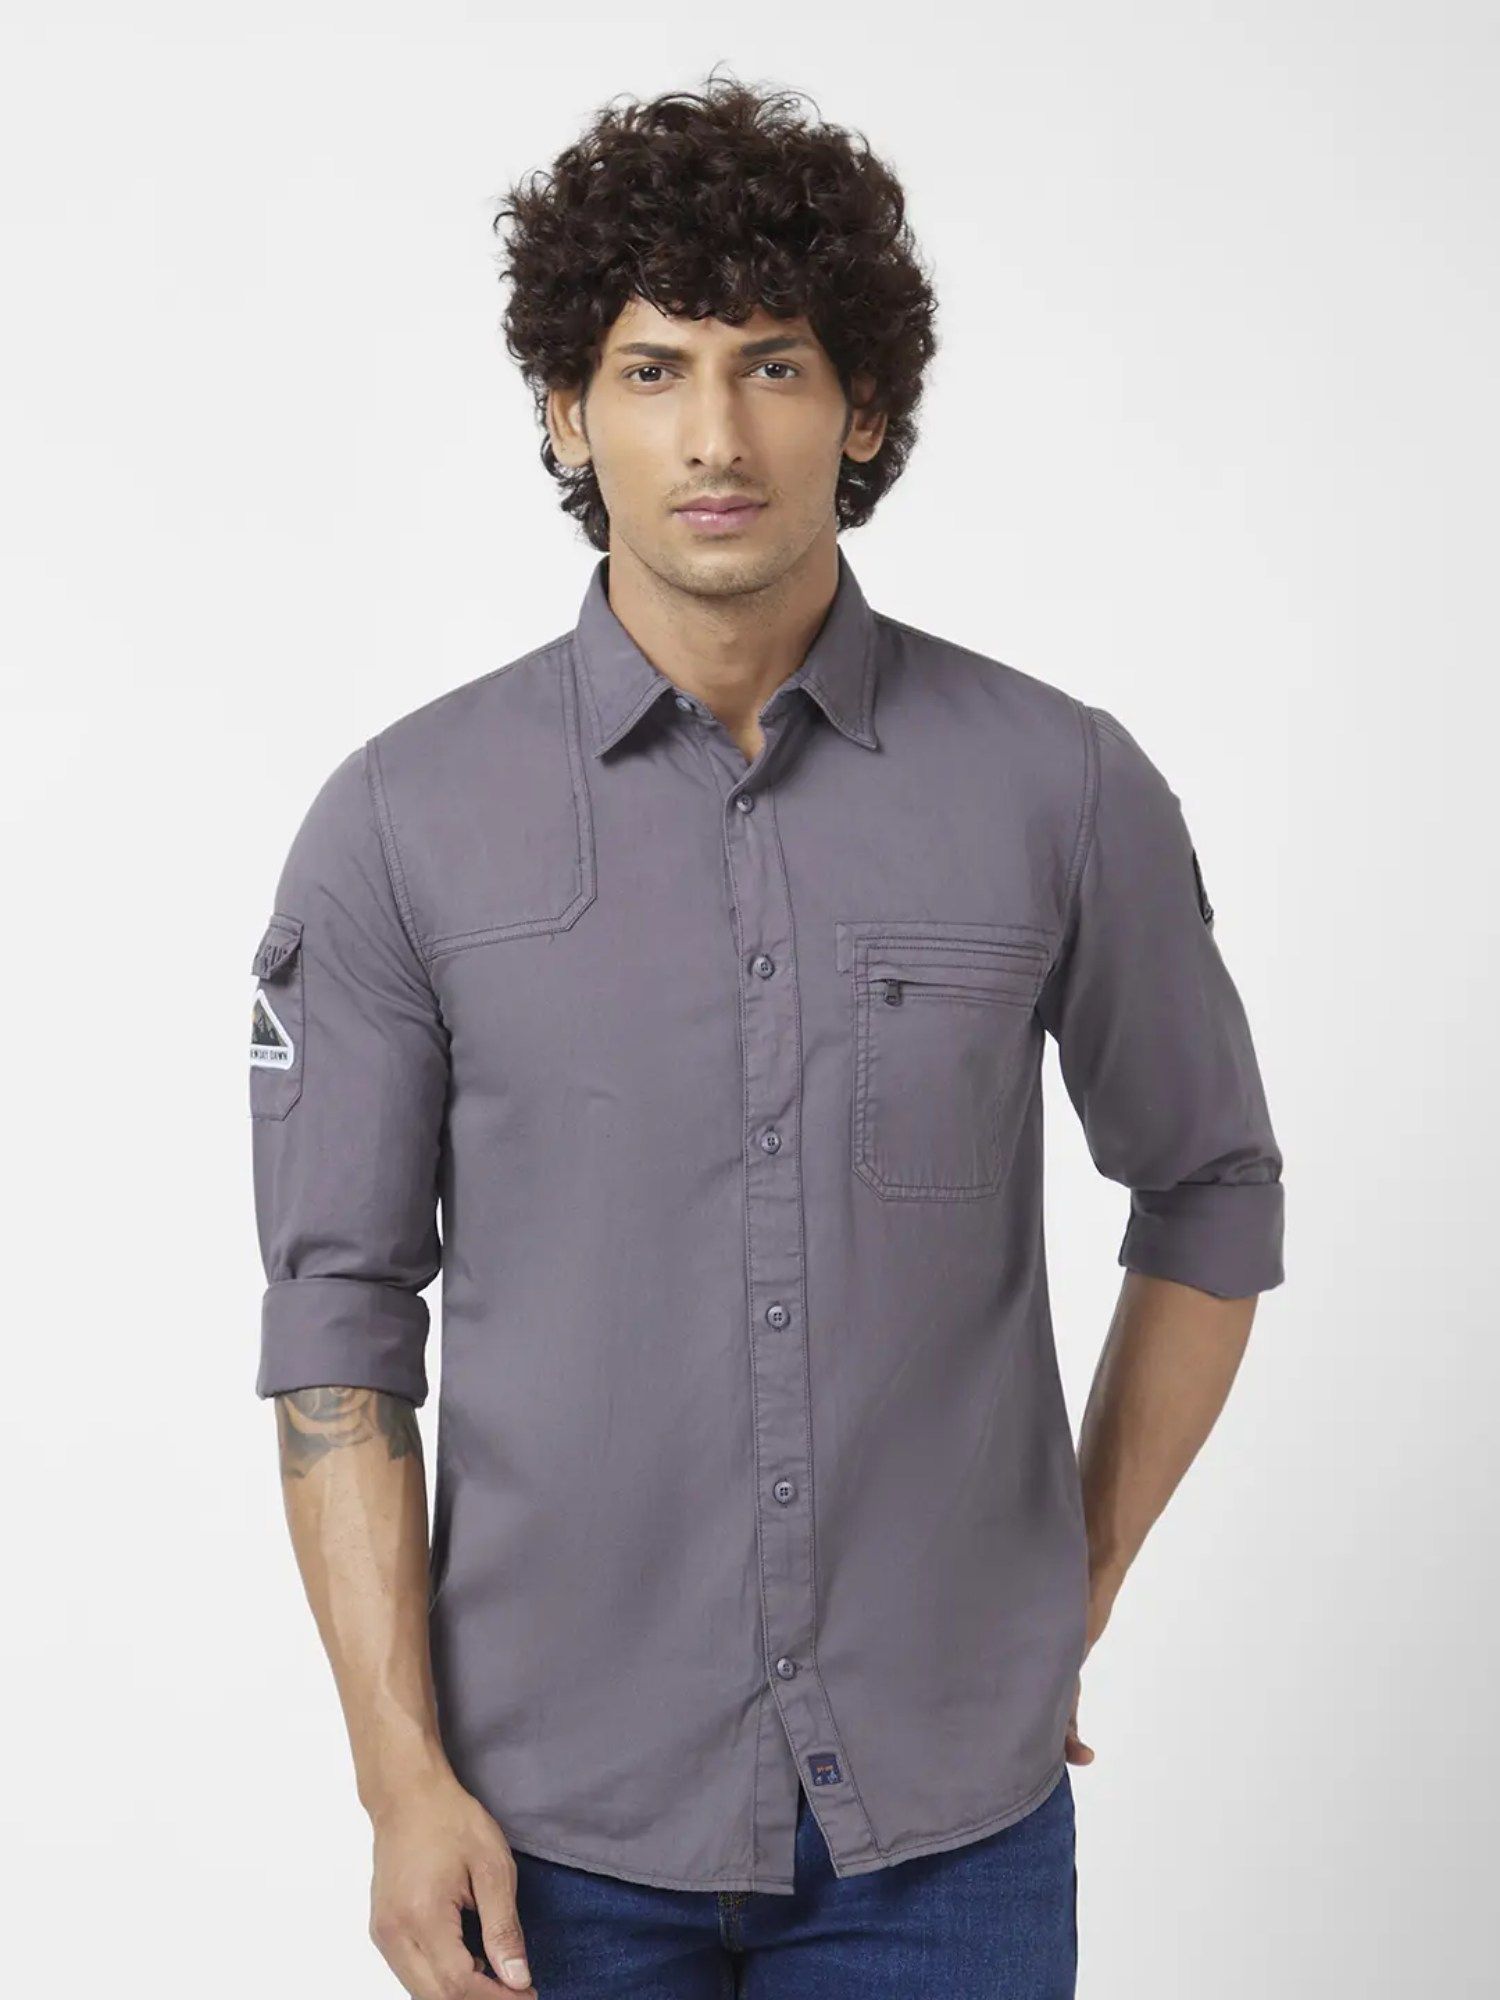 Buy FLY69 Slim Fit Denim Shirts Premium Collections Blue Colour L Size |  Slim Fit Shirt | Denim Shirt Online at Best Prices in India - JioMart.